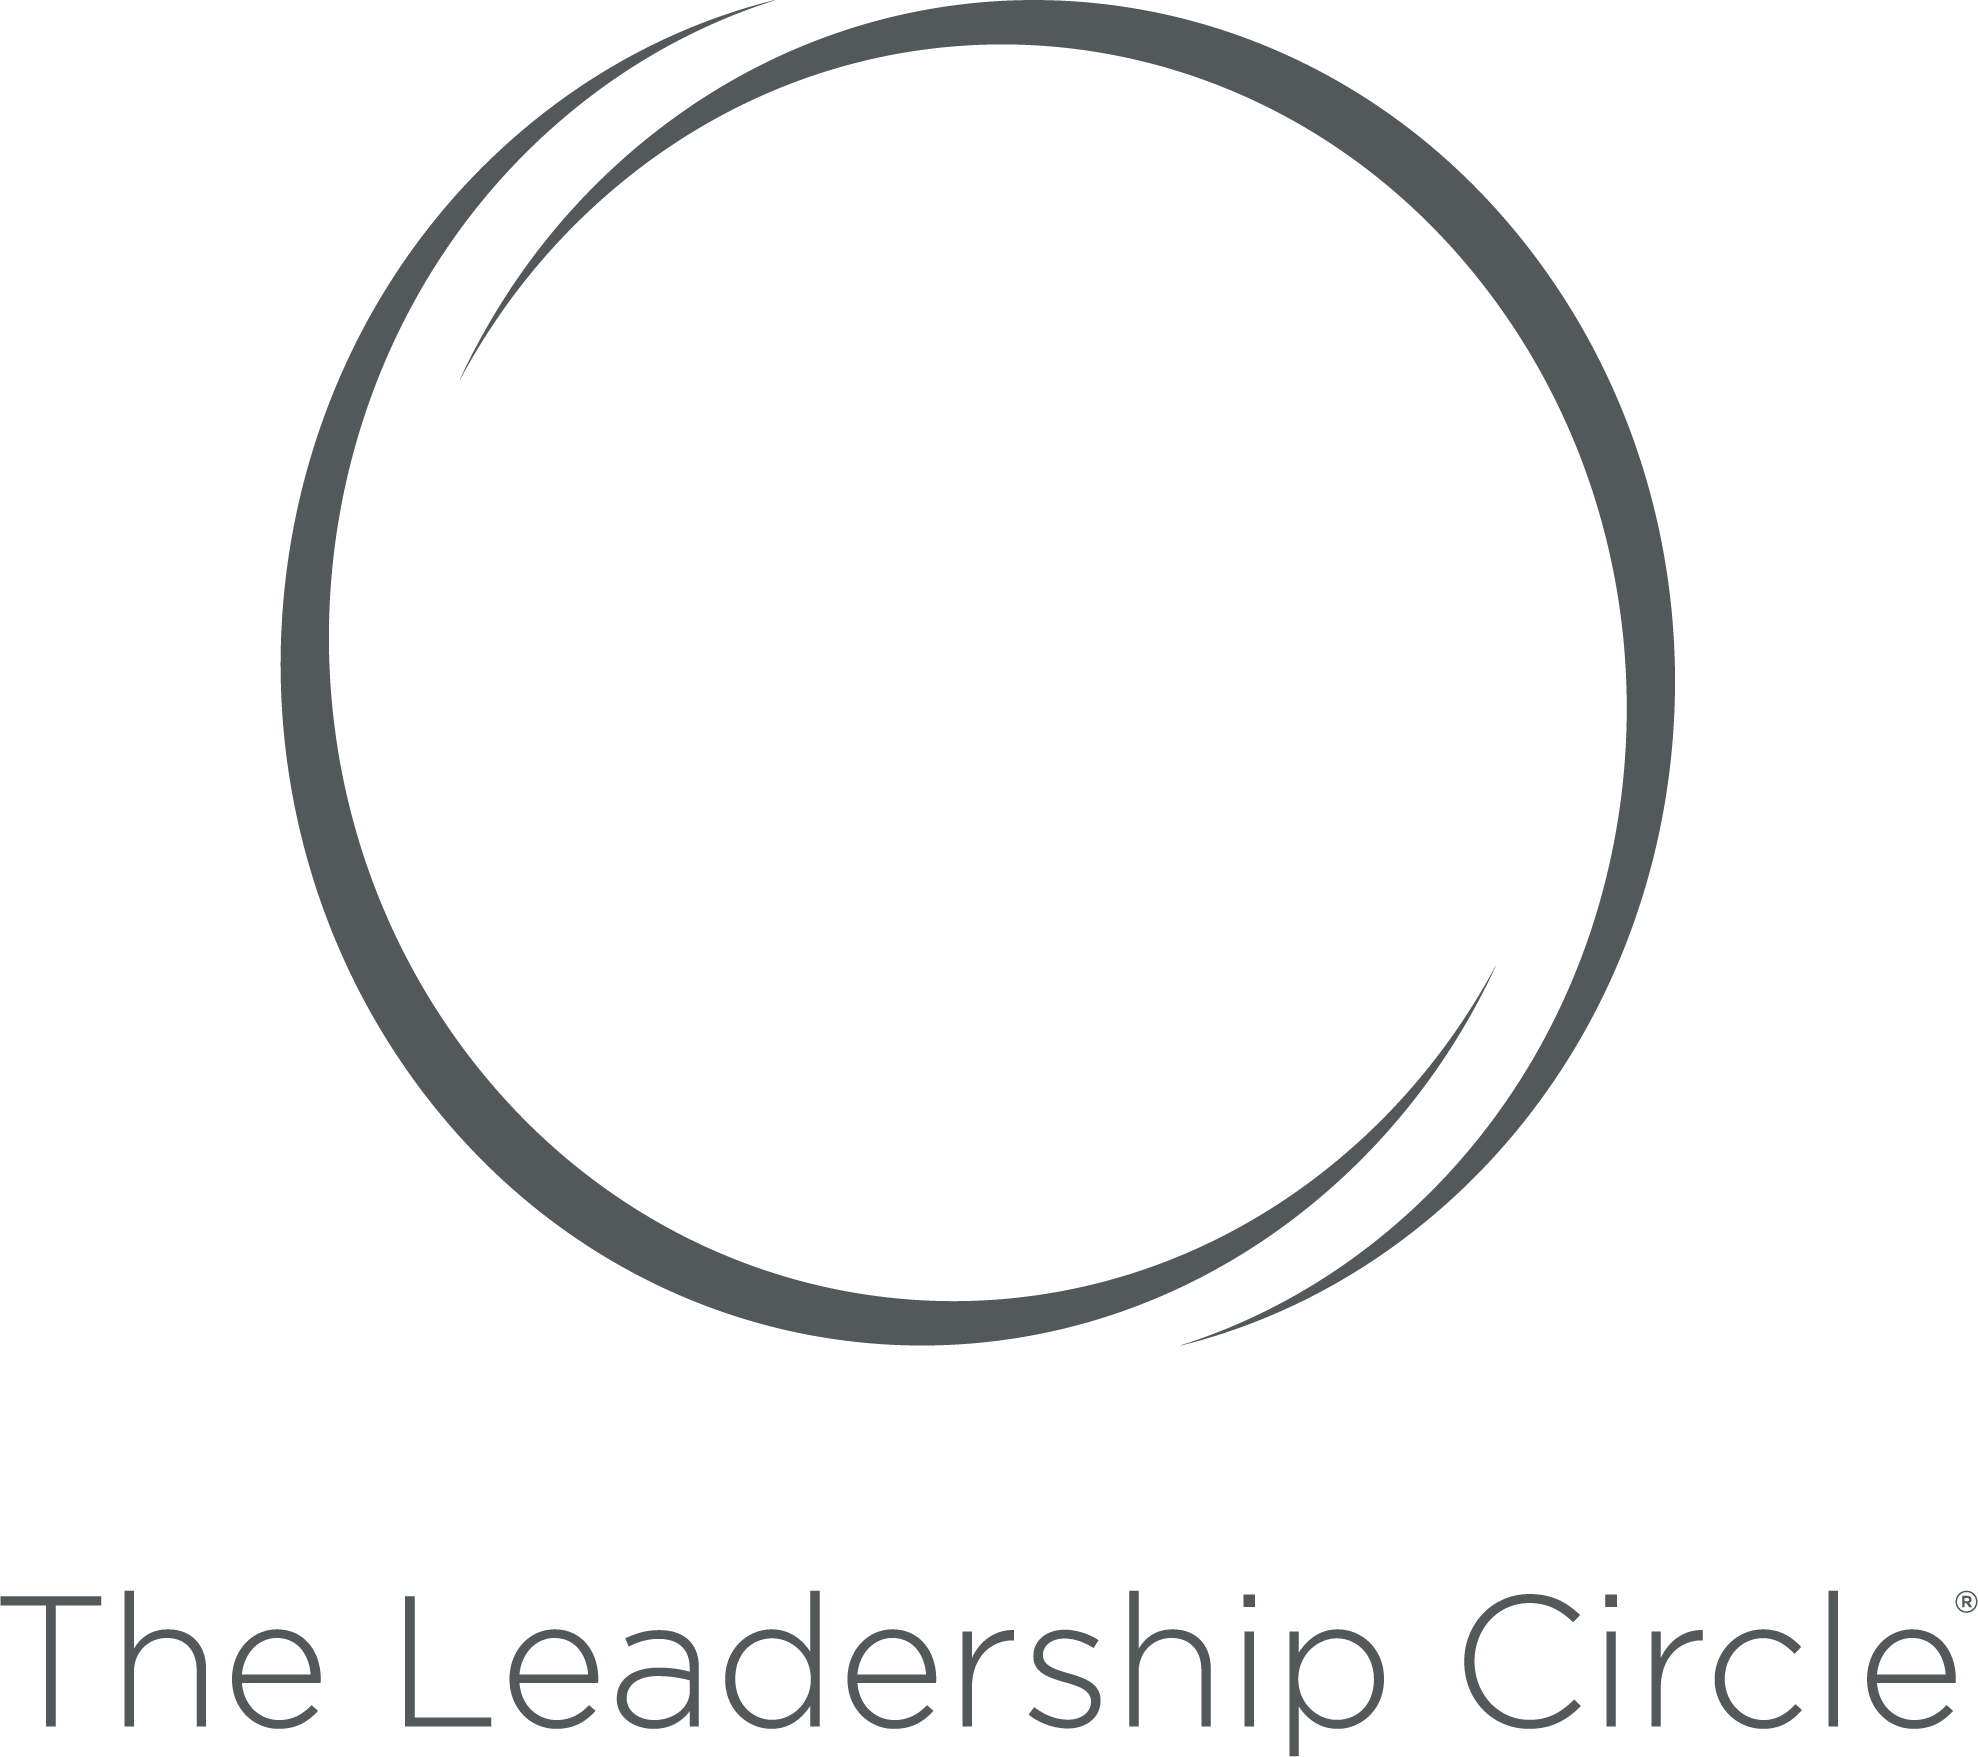 White Circle Logo - The Keys to Effective Leadership - The Leadership Circle